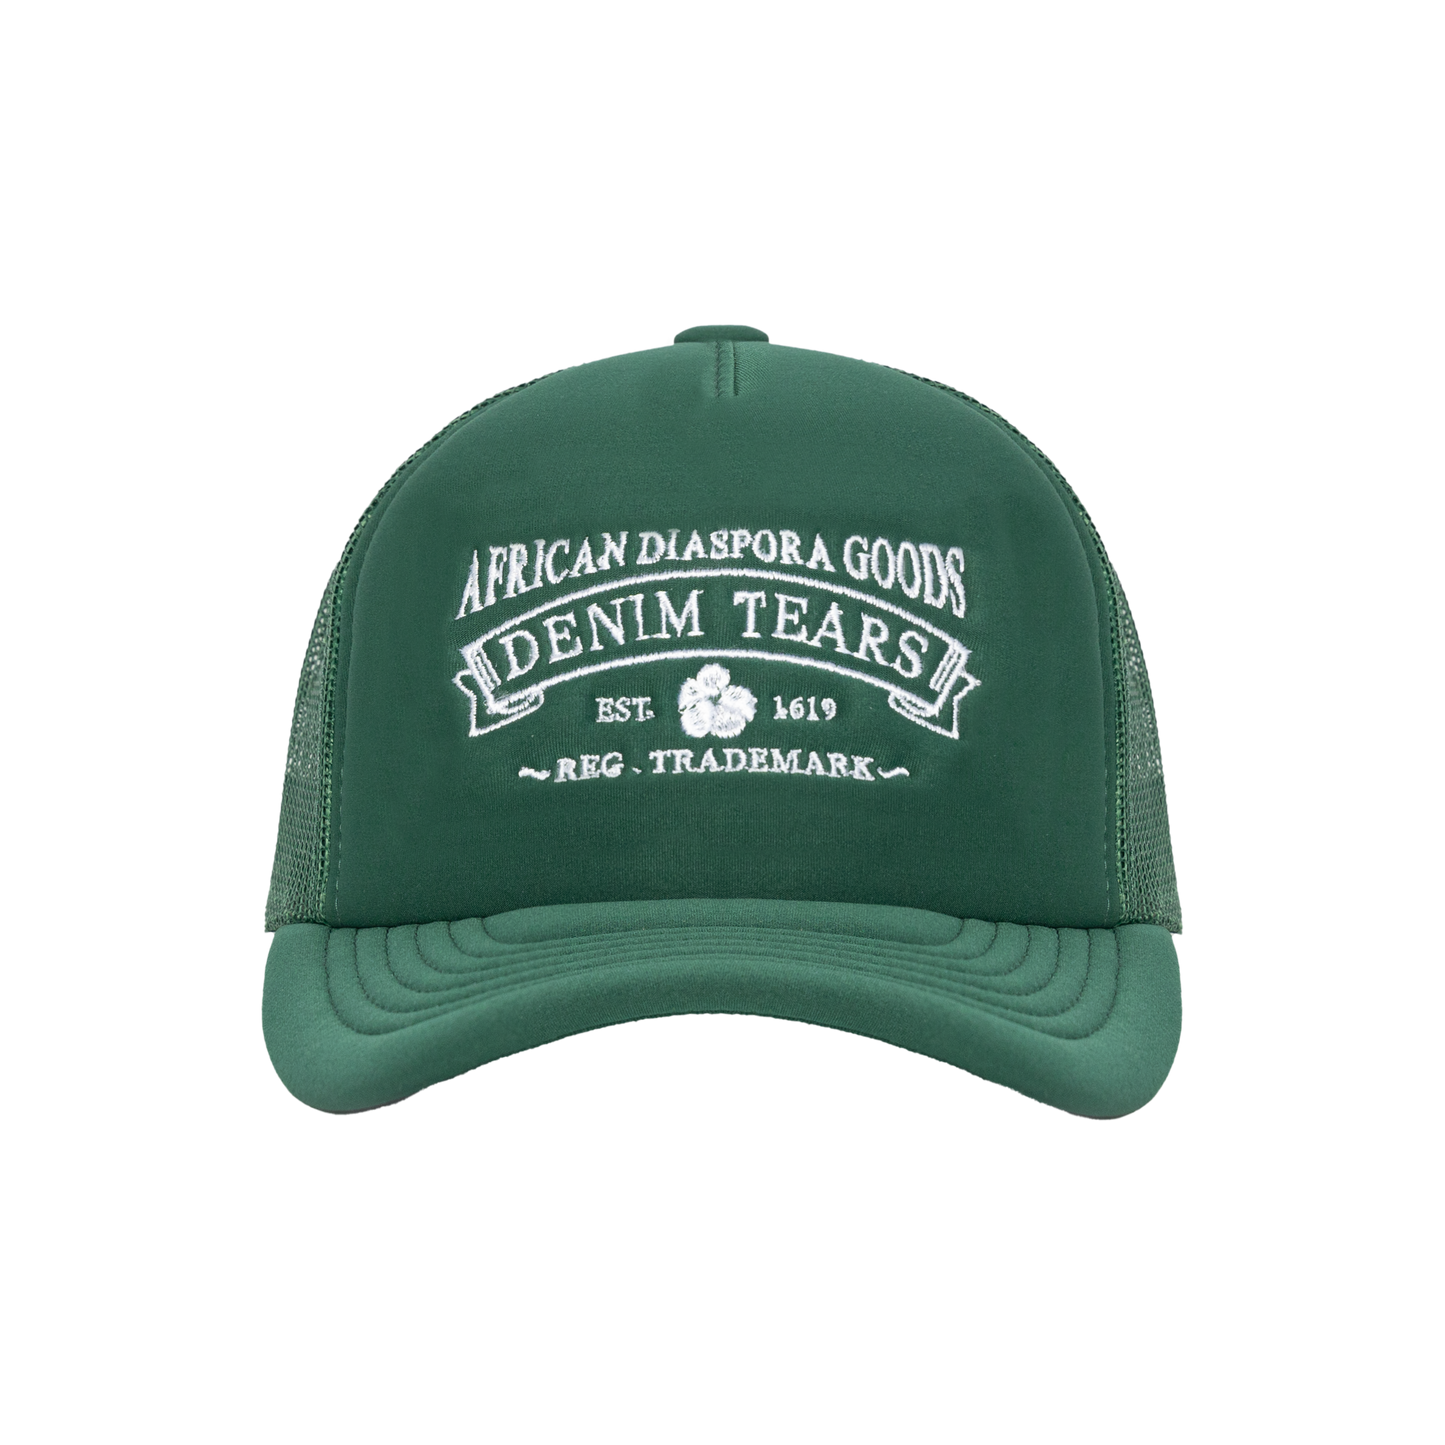 ADG Green Trucker Hat